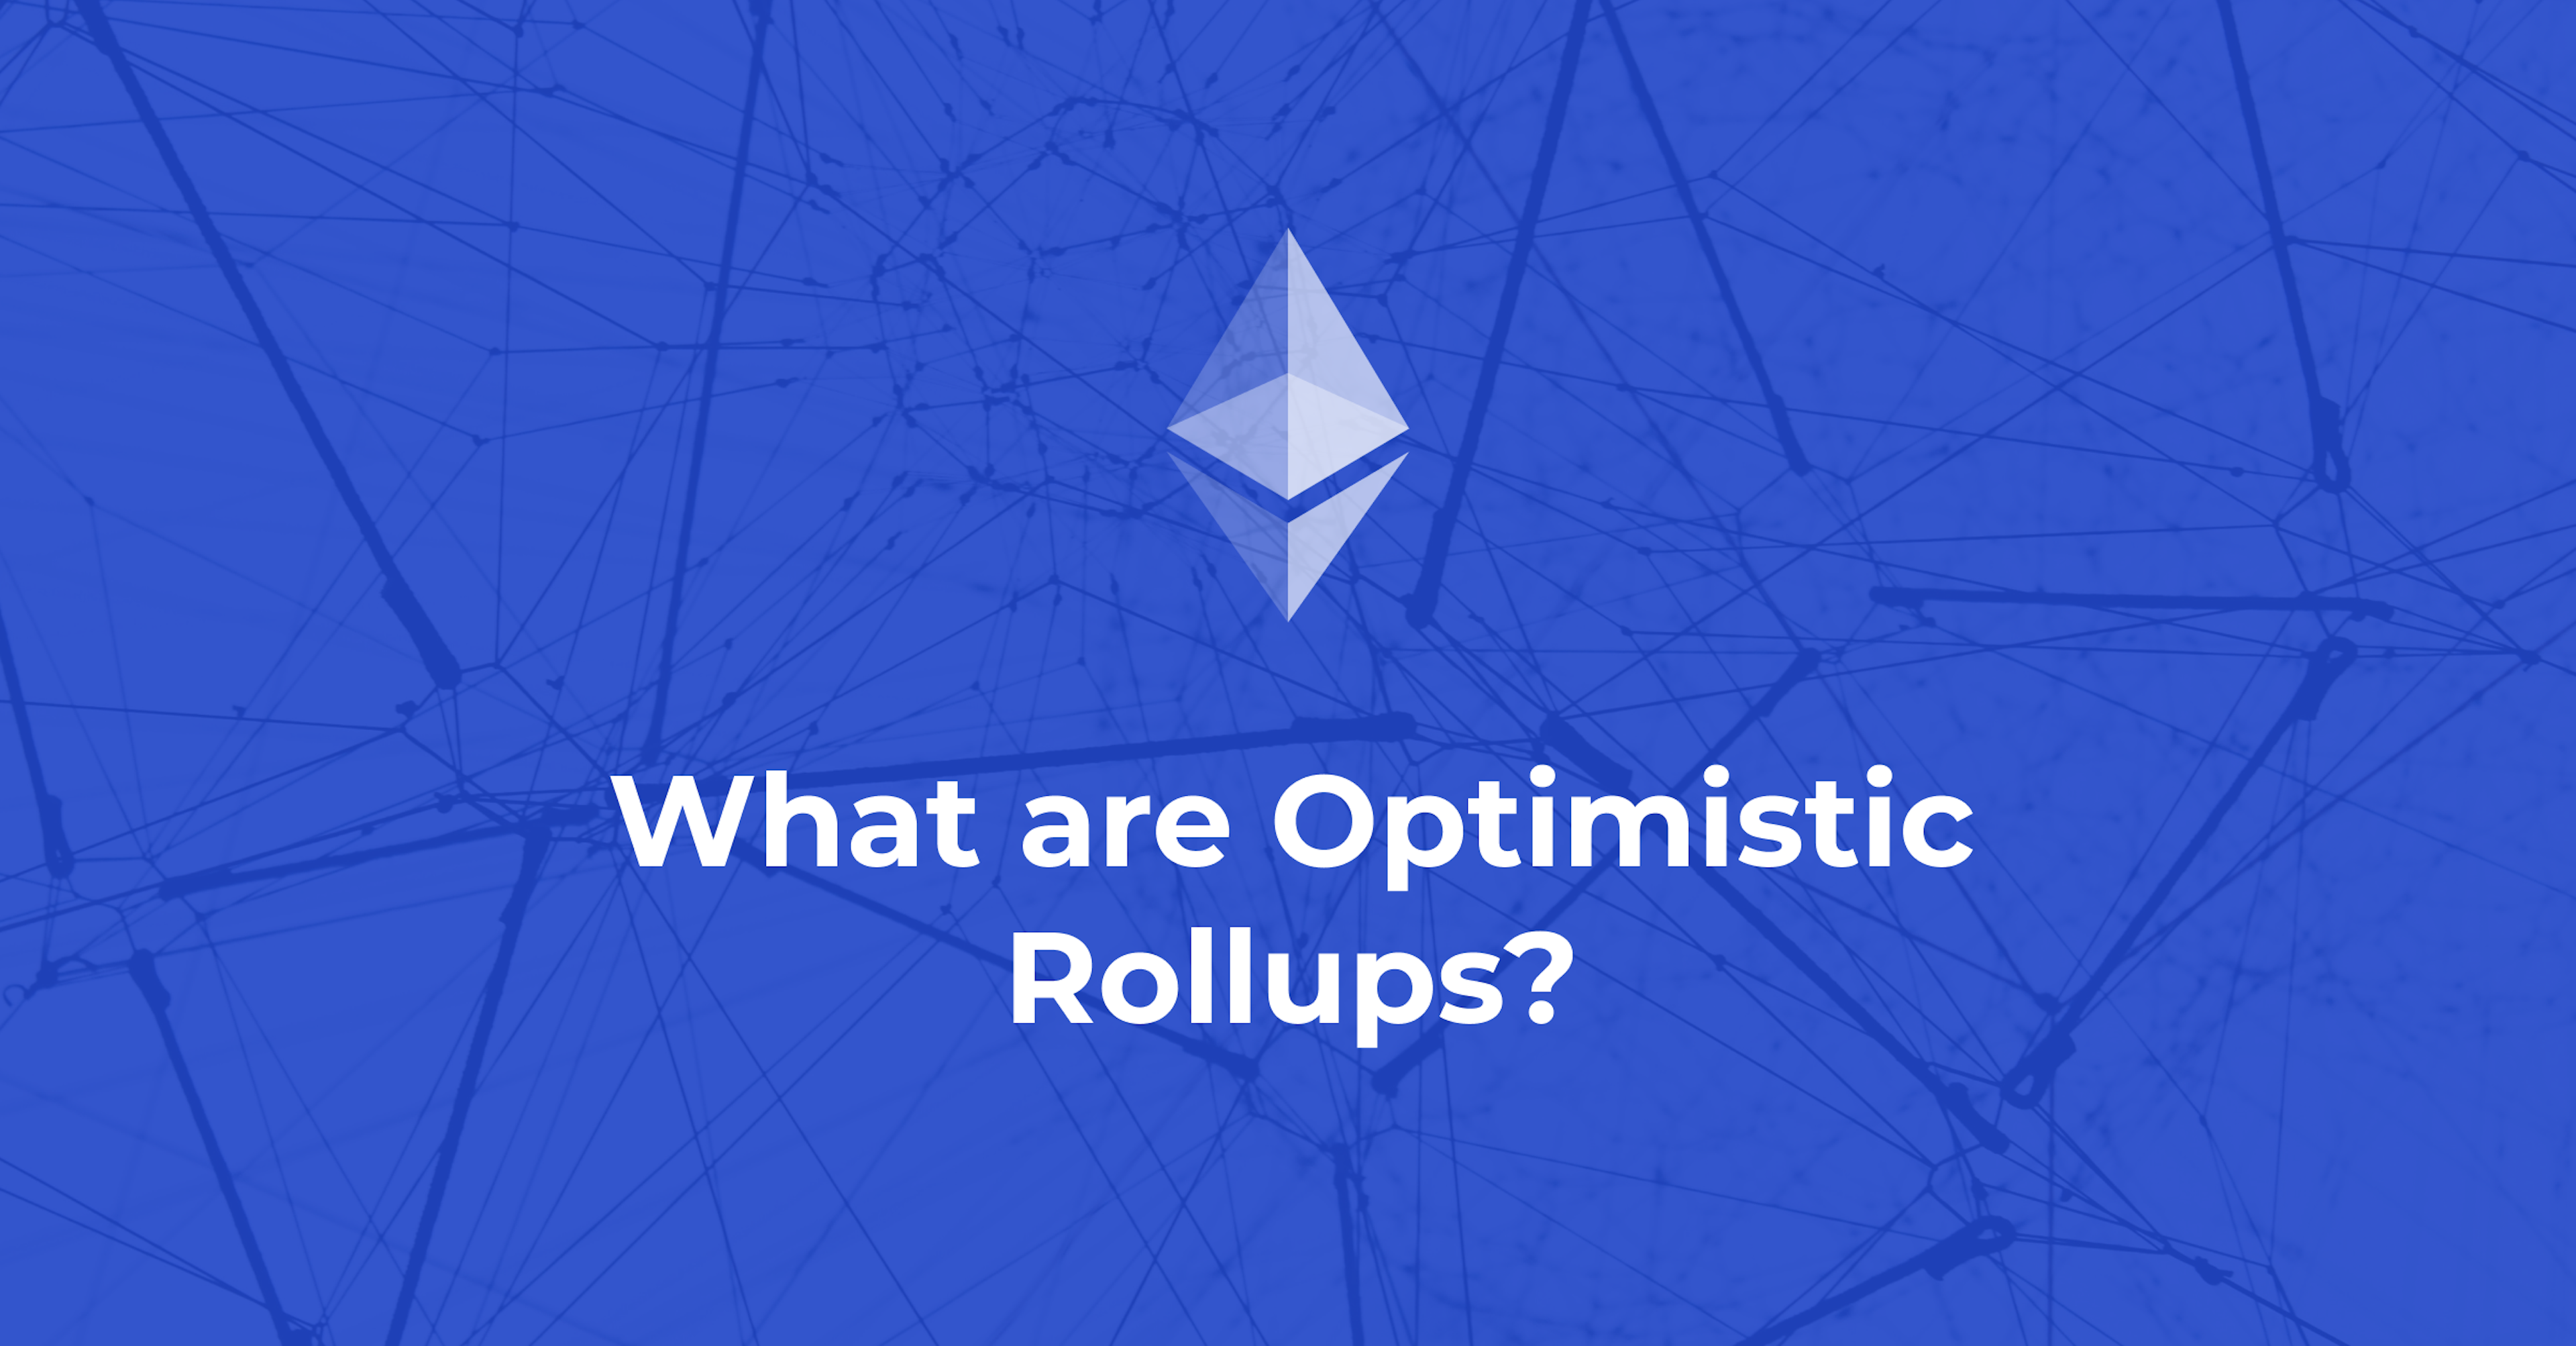 What are Optimistic Rollups?